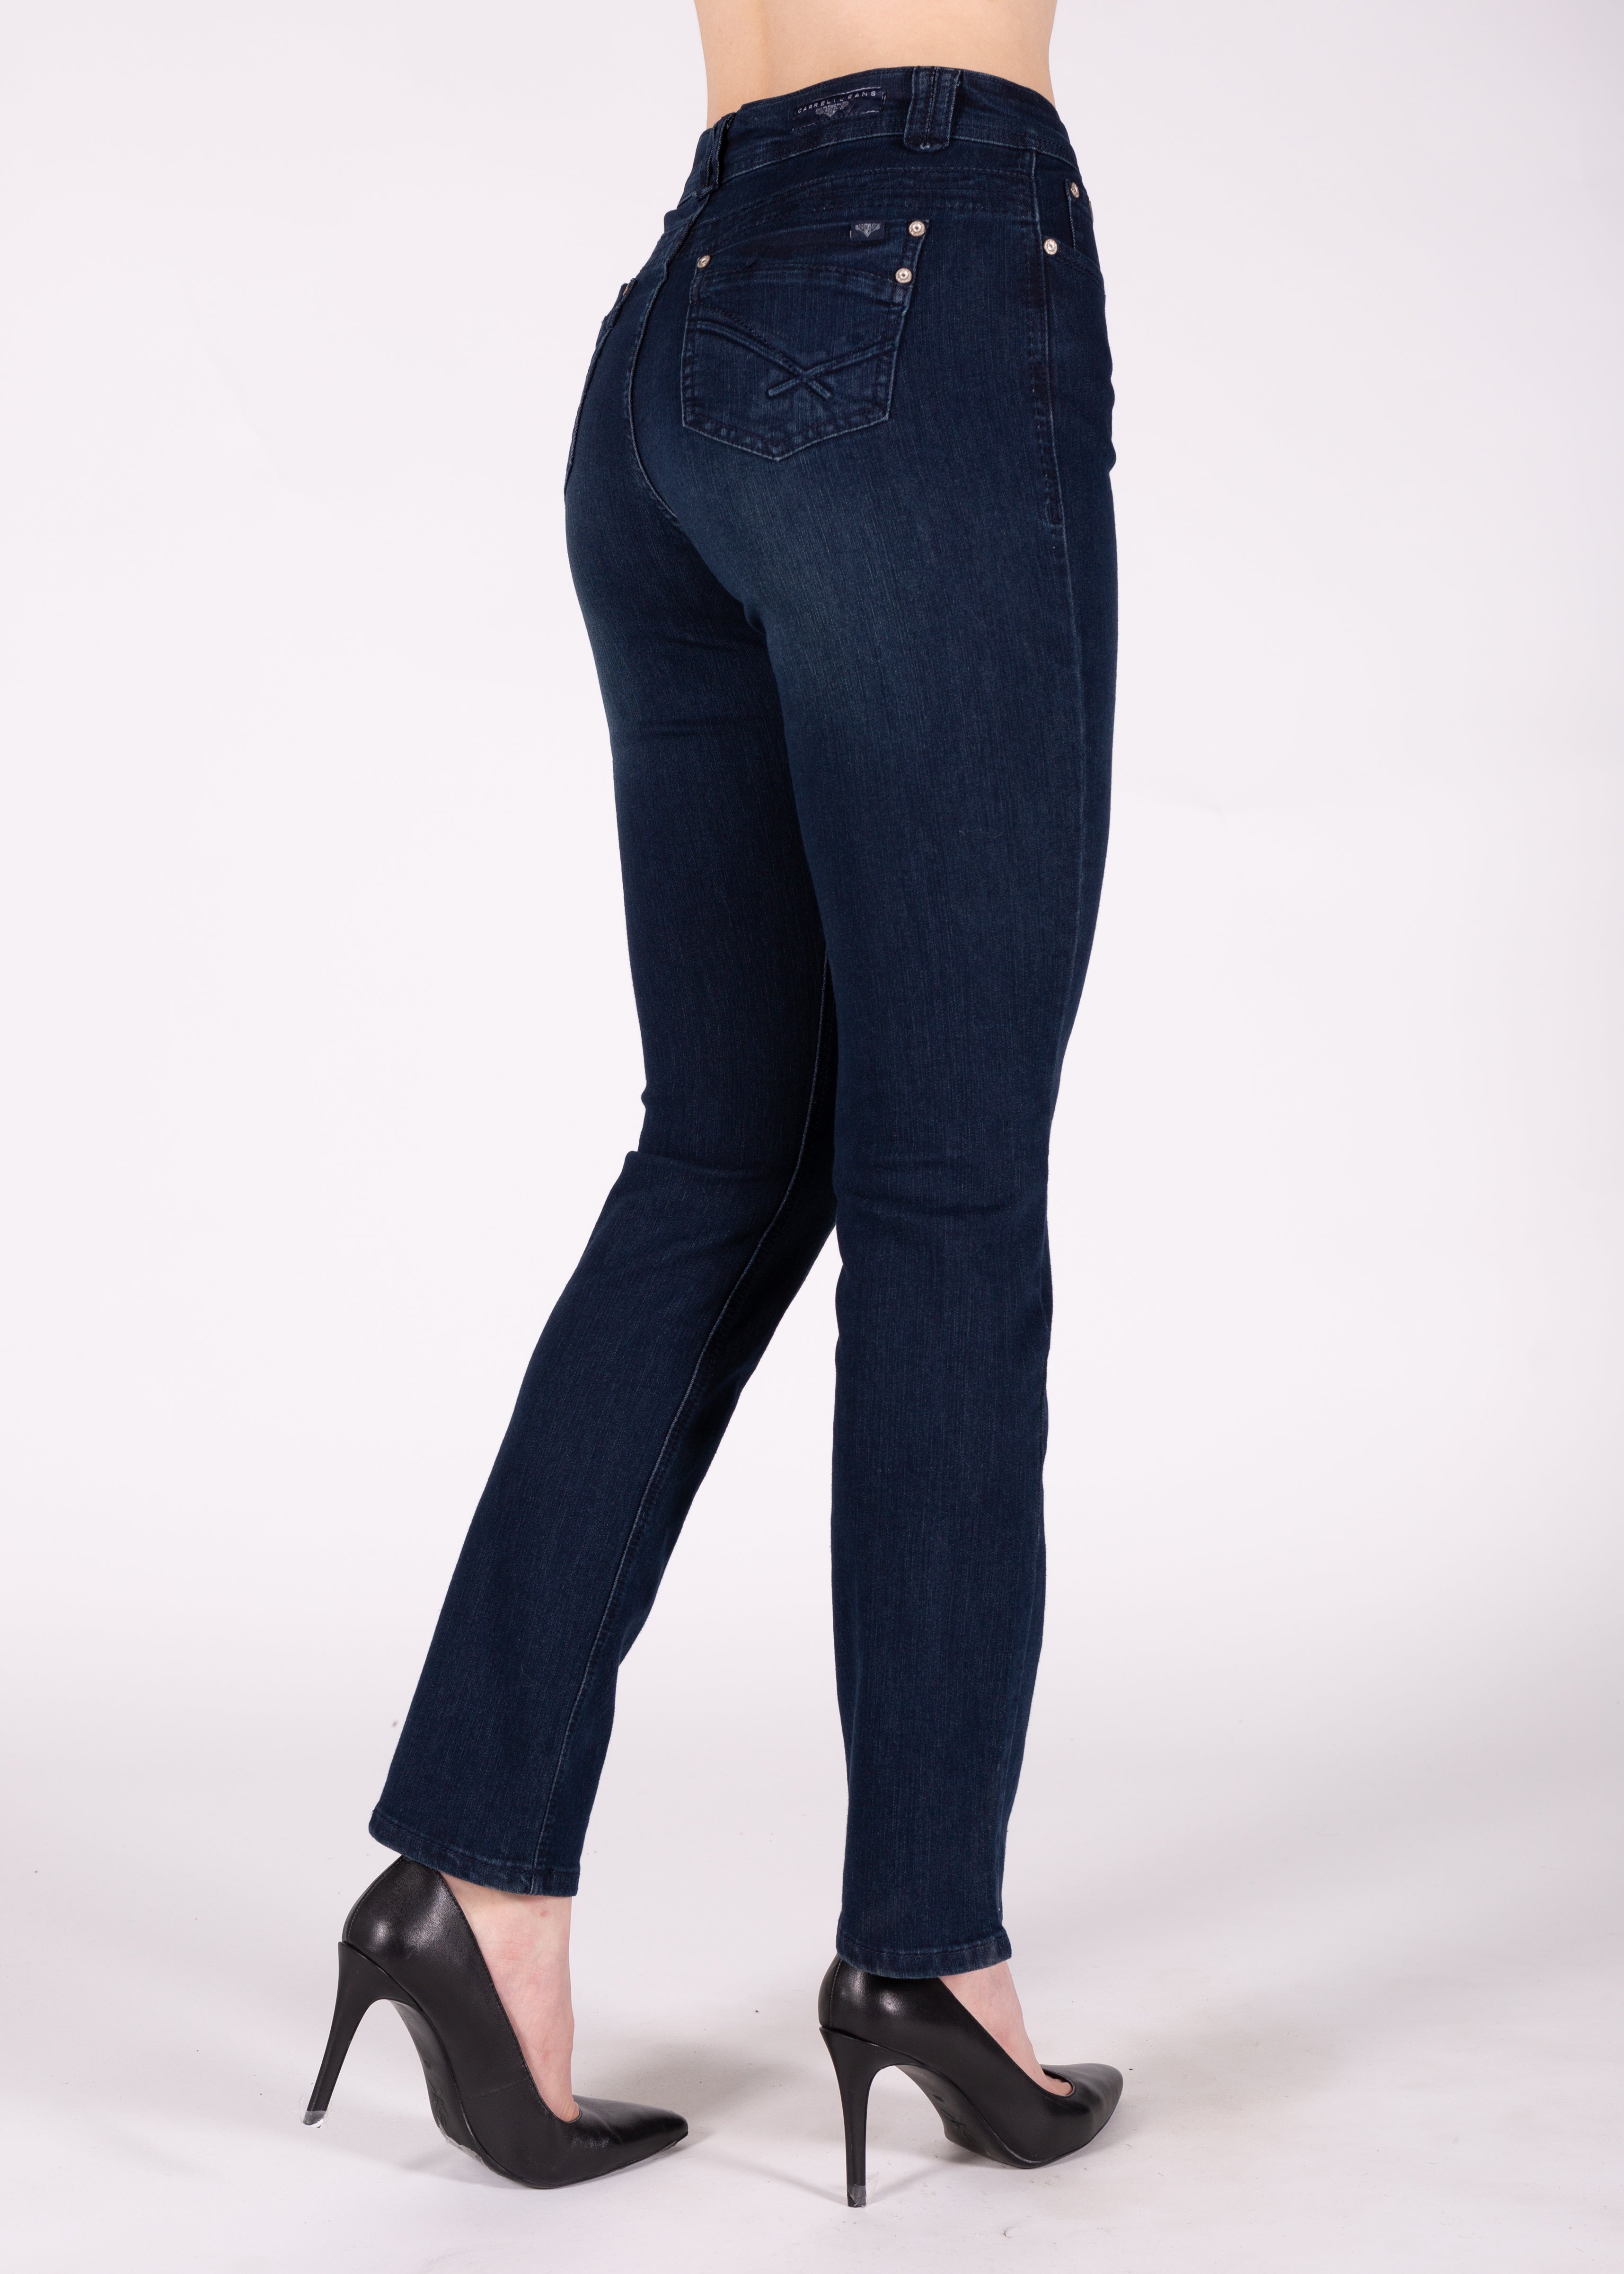 Carreli Jeans®  Angela Fit Straight Leg in Denim Blue